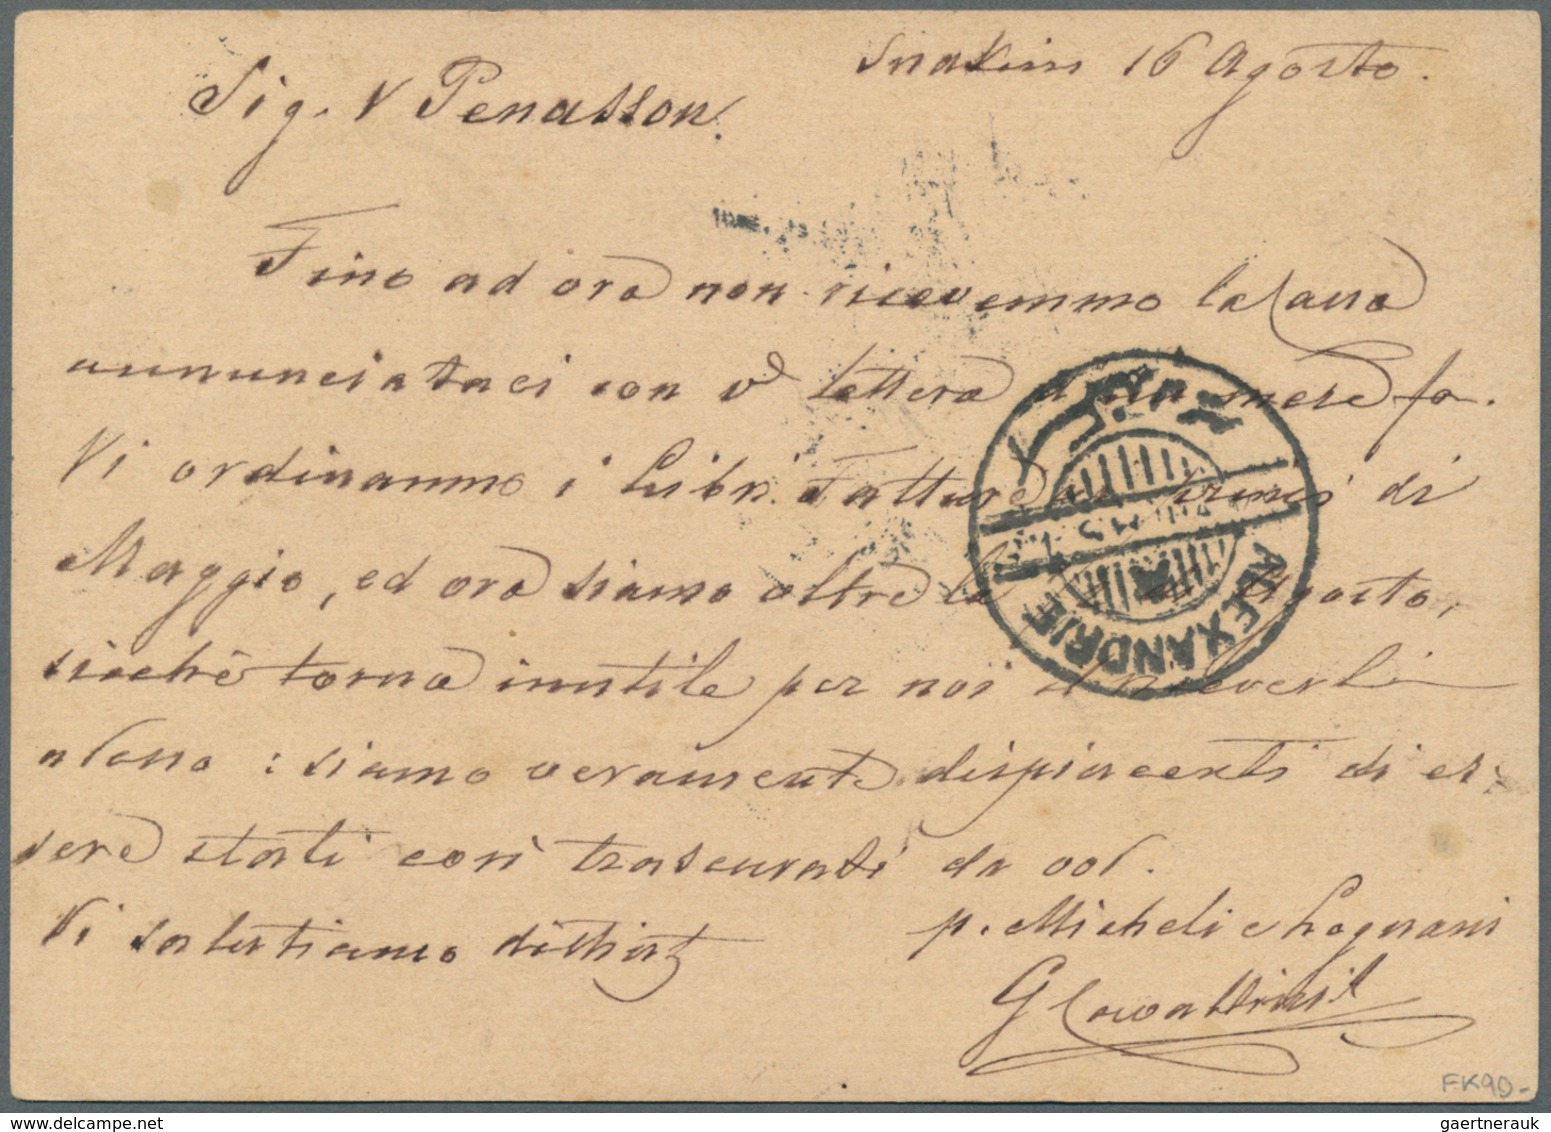 Sudan: 1885 SUAKIN: Postal Stationery Card 20m. Brown Of Egypt Used From Suakin To Alexandria Via Su - Sudan (1954-...)